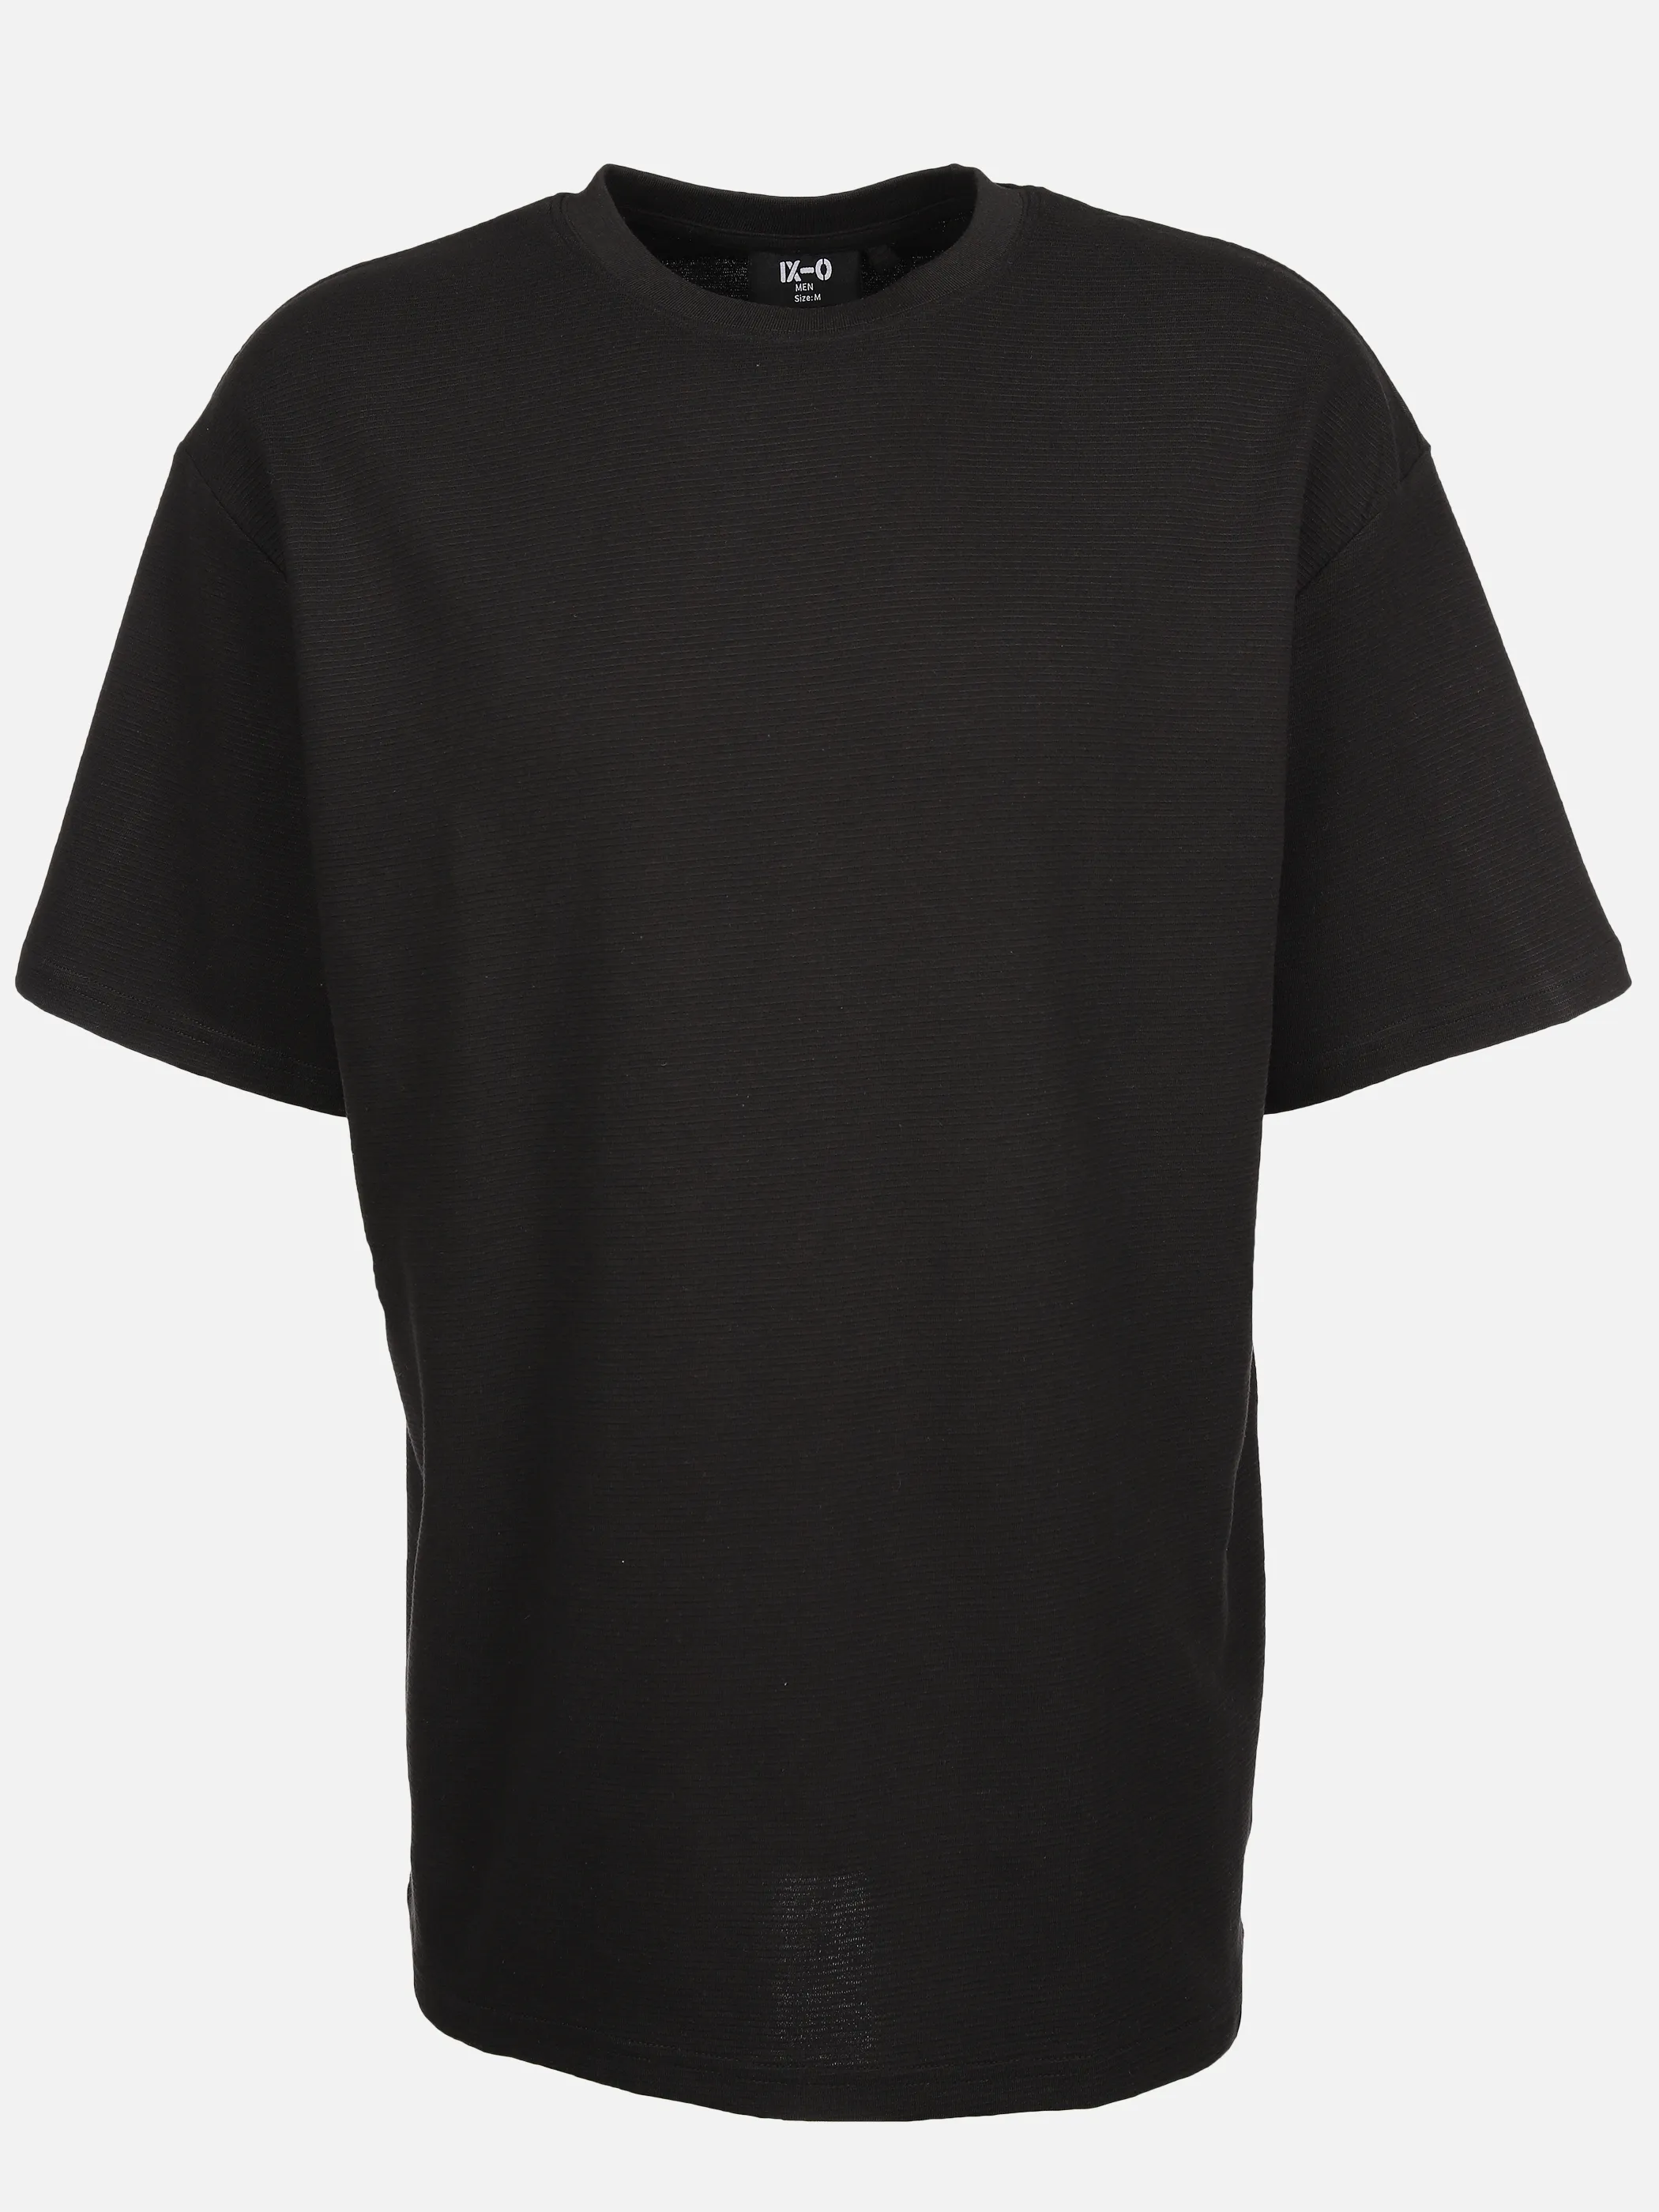 IX-O YF-He- T-Shirt Relaxed Fit Schwarz 891819 BLACK 1